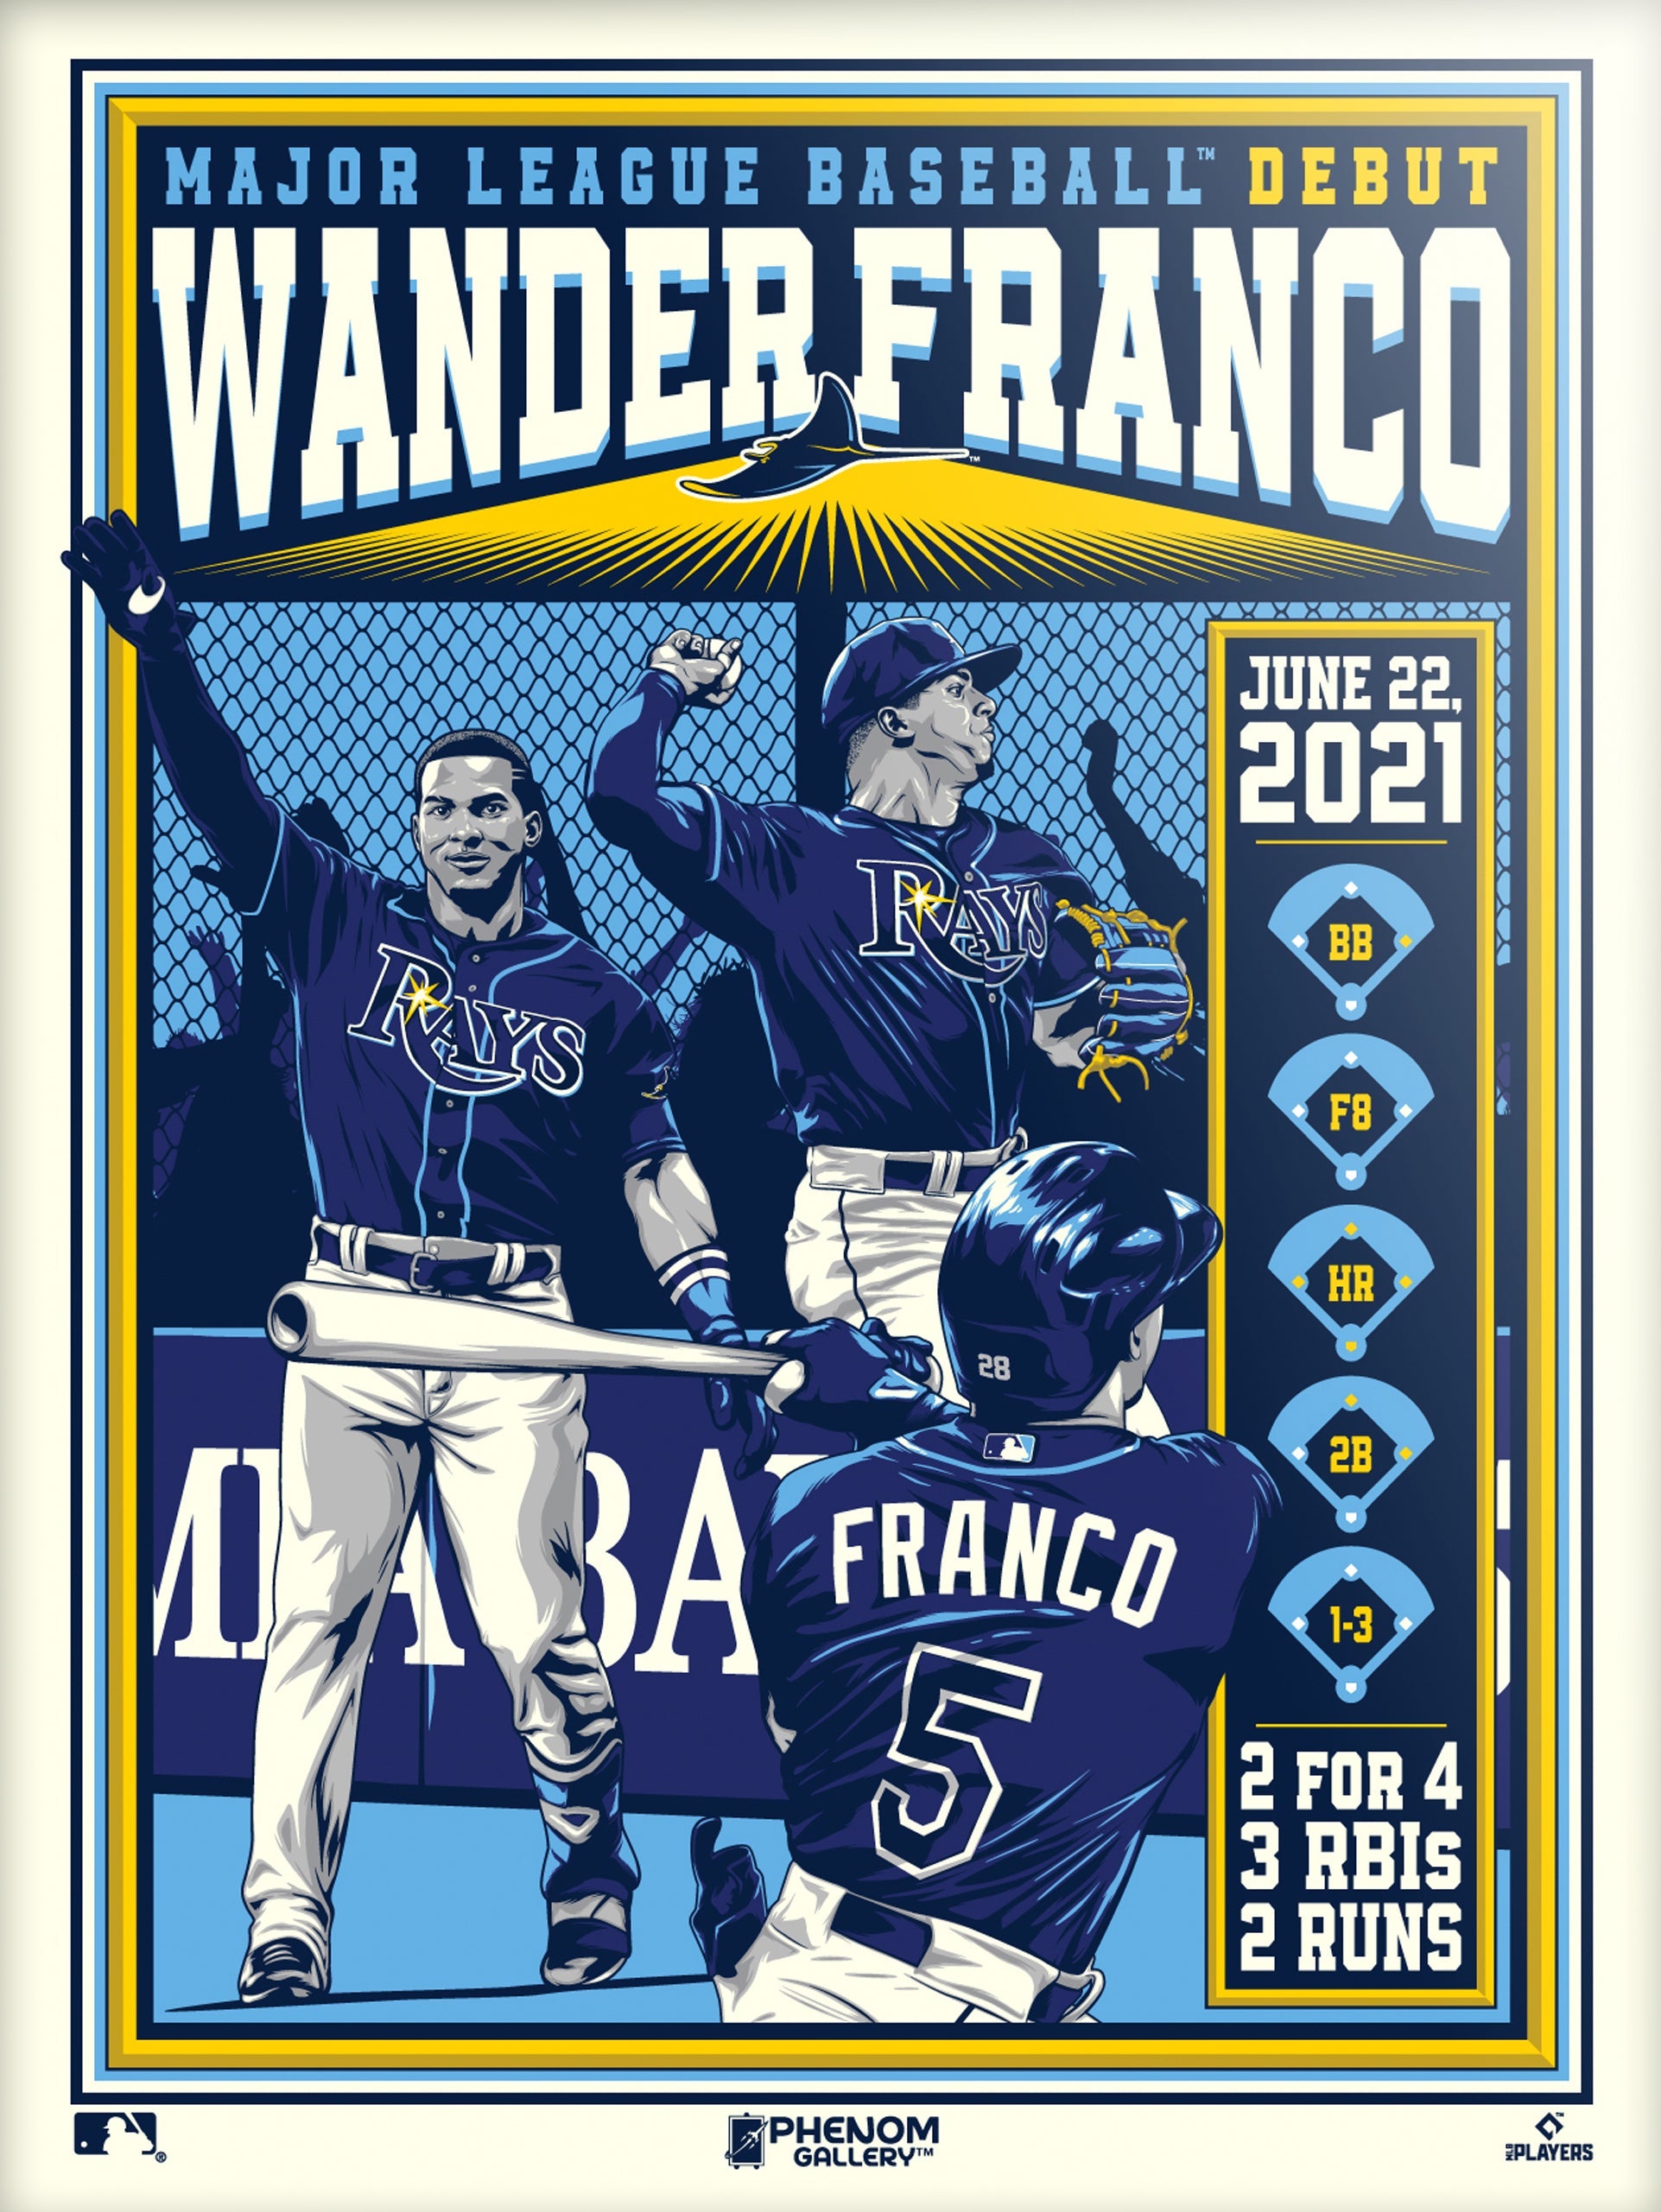 Orlando Magic - Tampa Bay Rays shortstop, Wander Franco